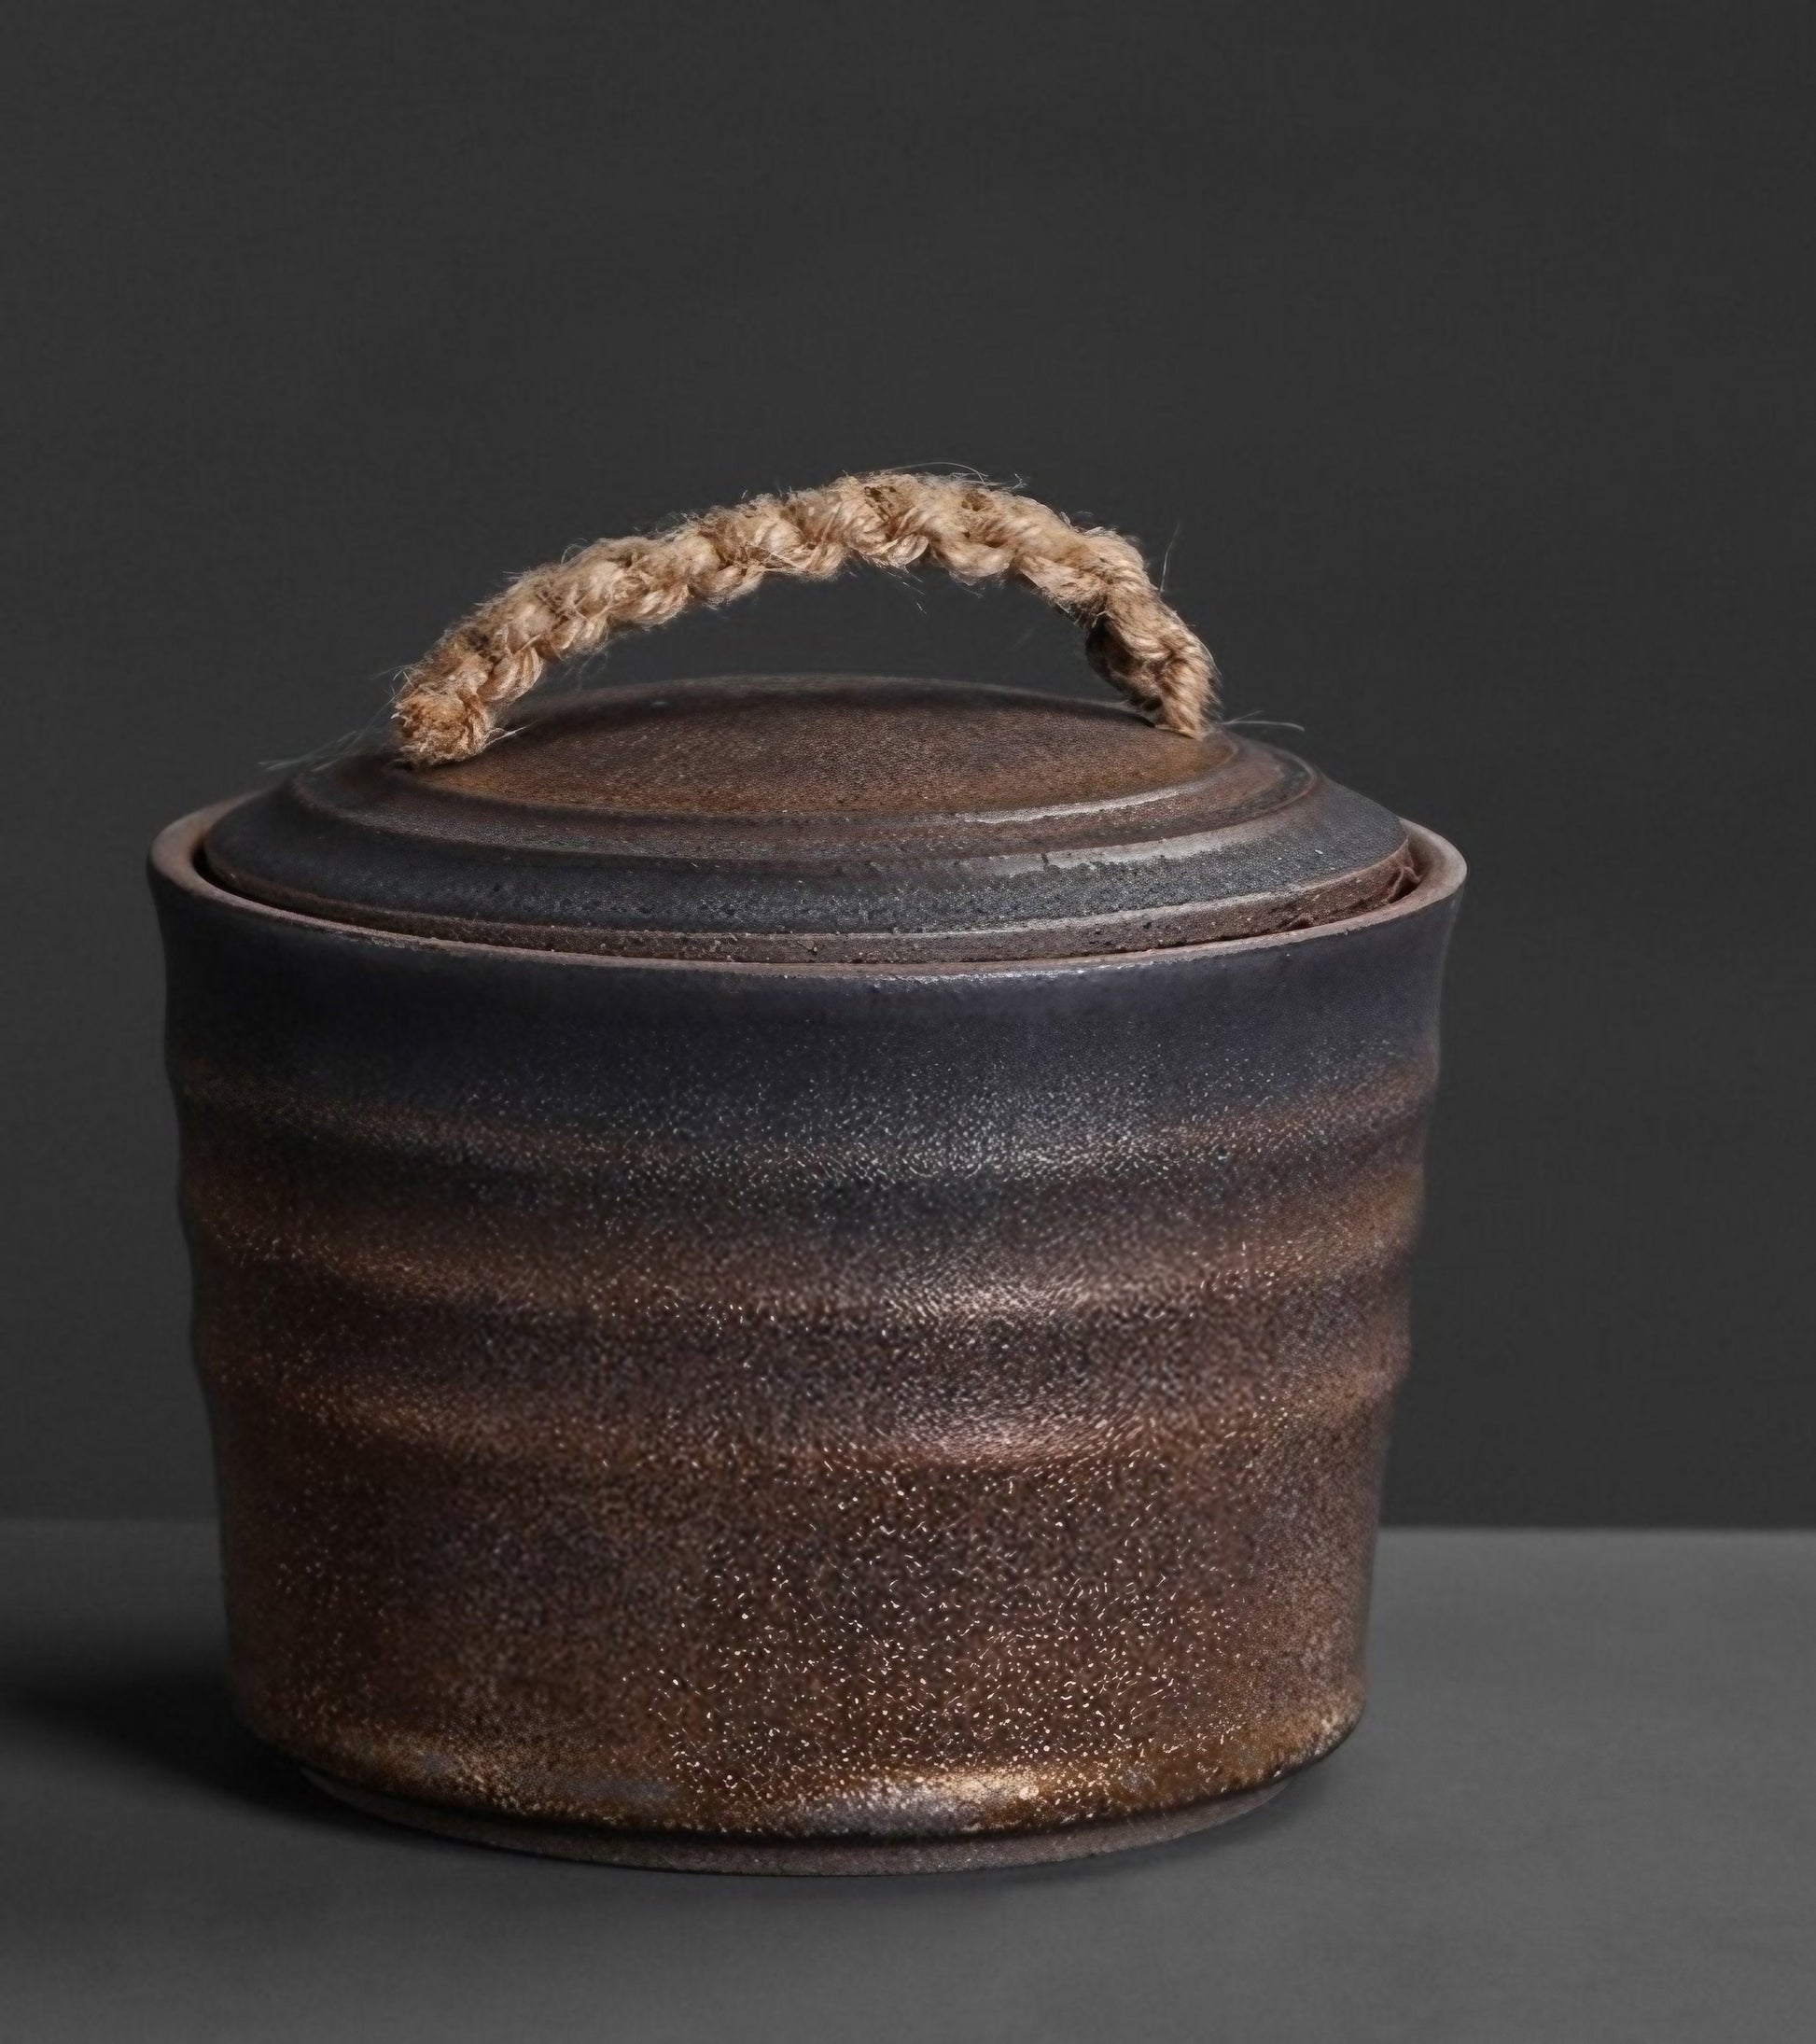 Wabi-Sabi Bucket Ceramic Jar with a rope handle on a table, showcasing design